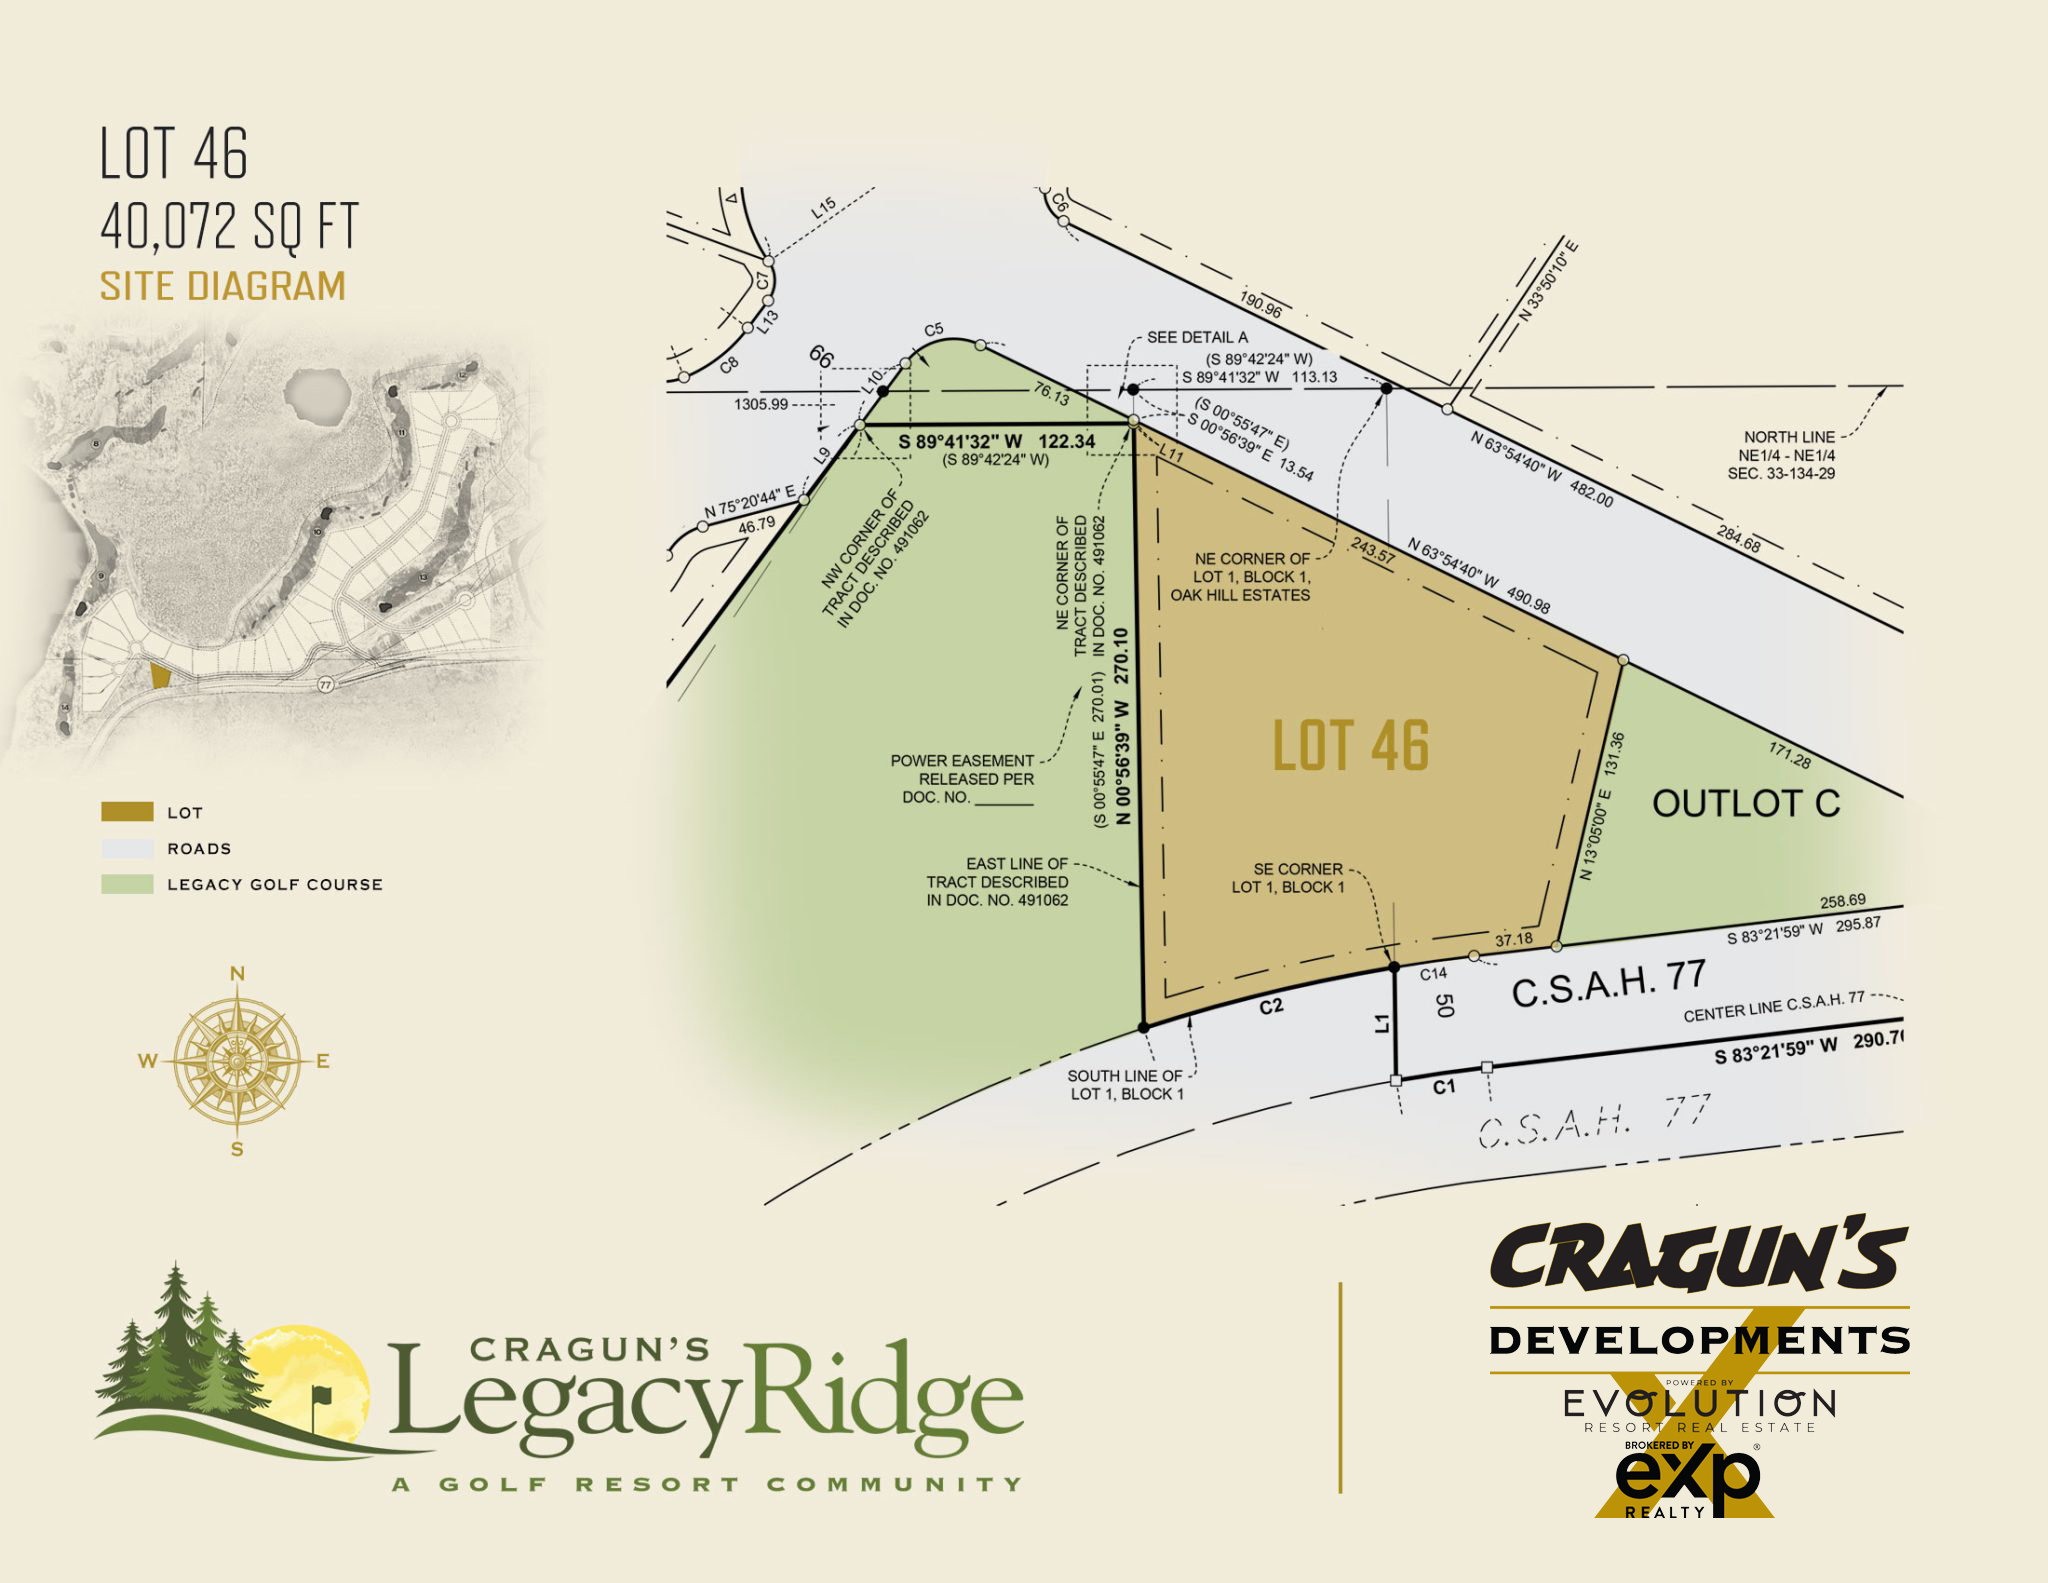 Legacy Ridge Lot 46 at Cragun's Developments in Brainerd, MN